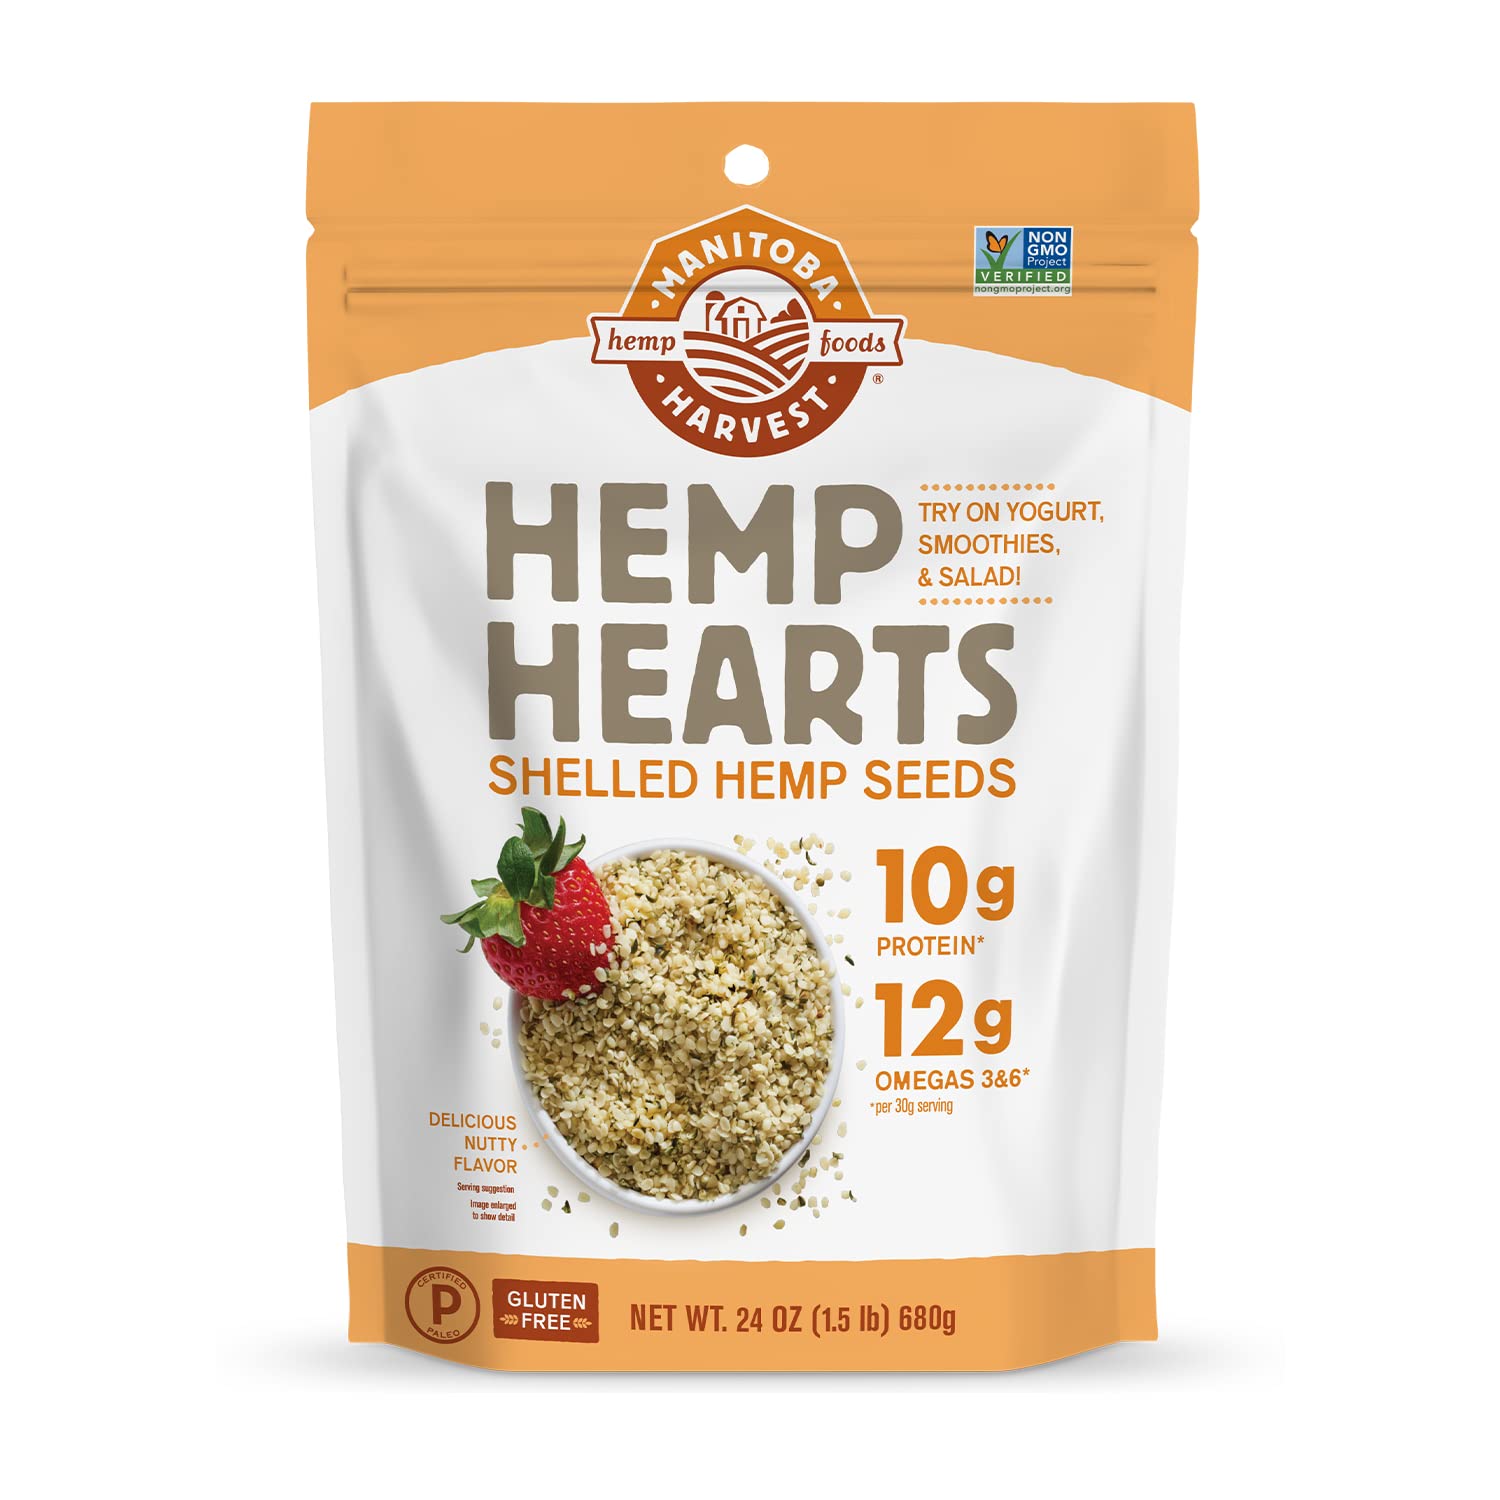 24-Oz Manitoba Harvest Hemp Hearts Shelled Hemp Seeds $10.42 w/ S&S + Free Shipping w/ Prime or on $25+